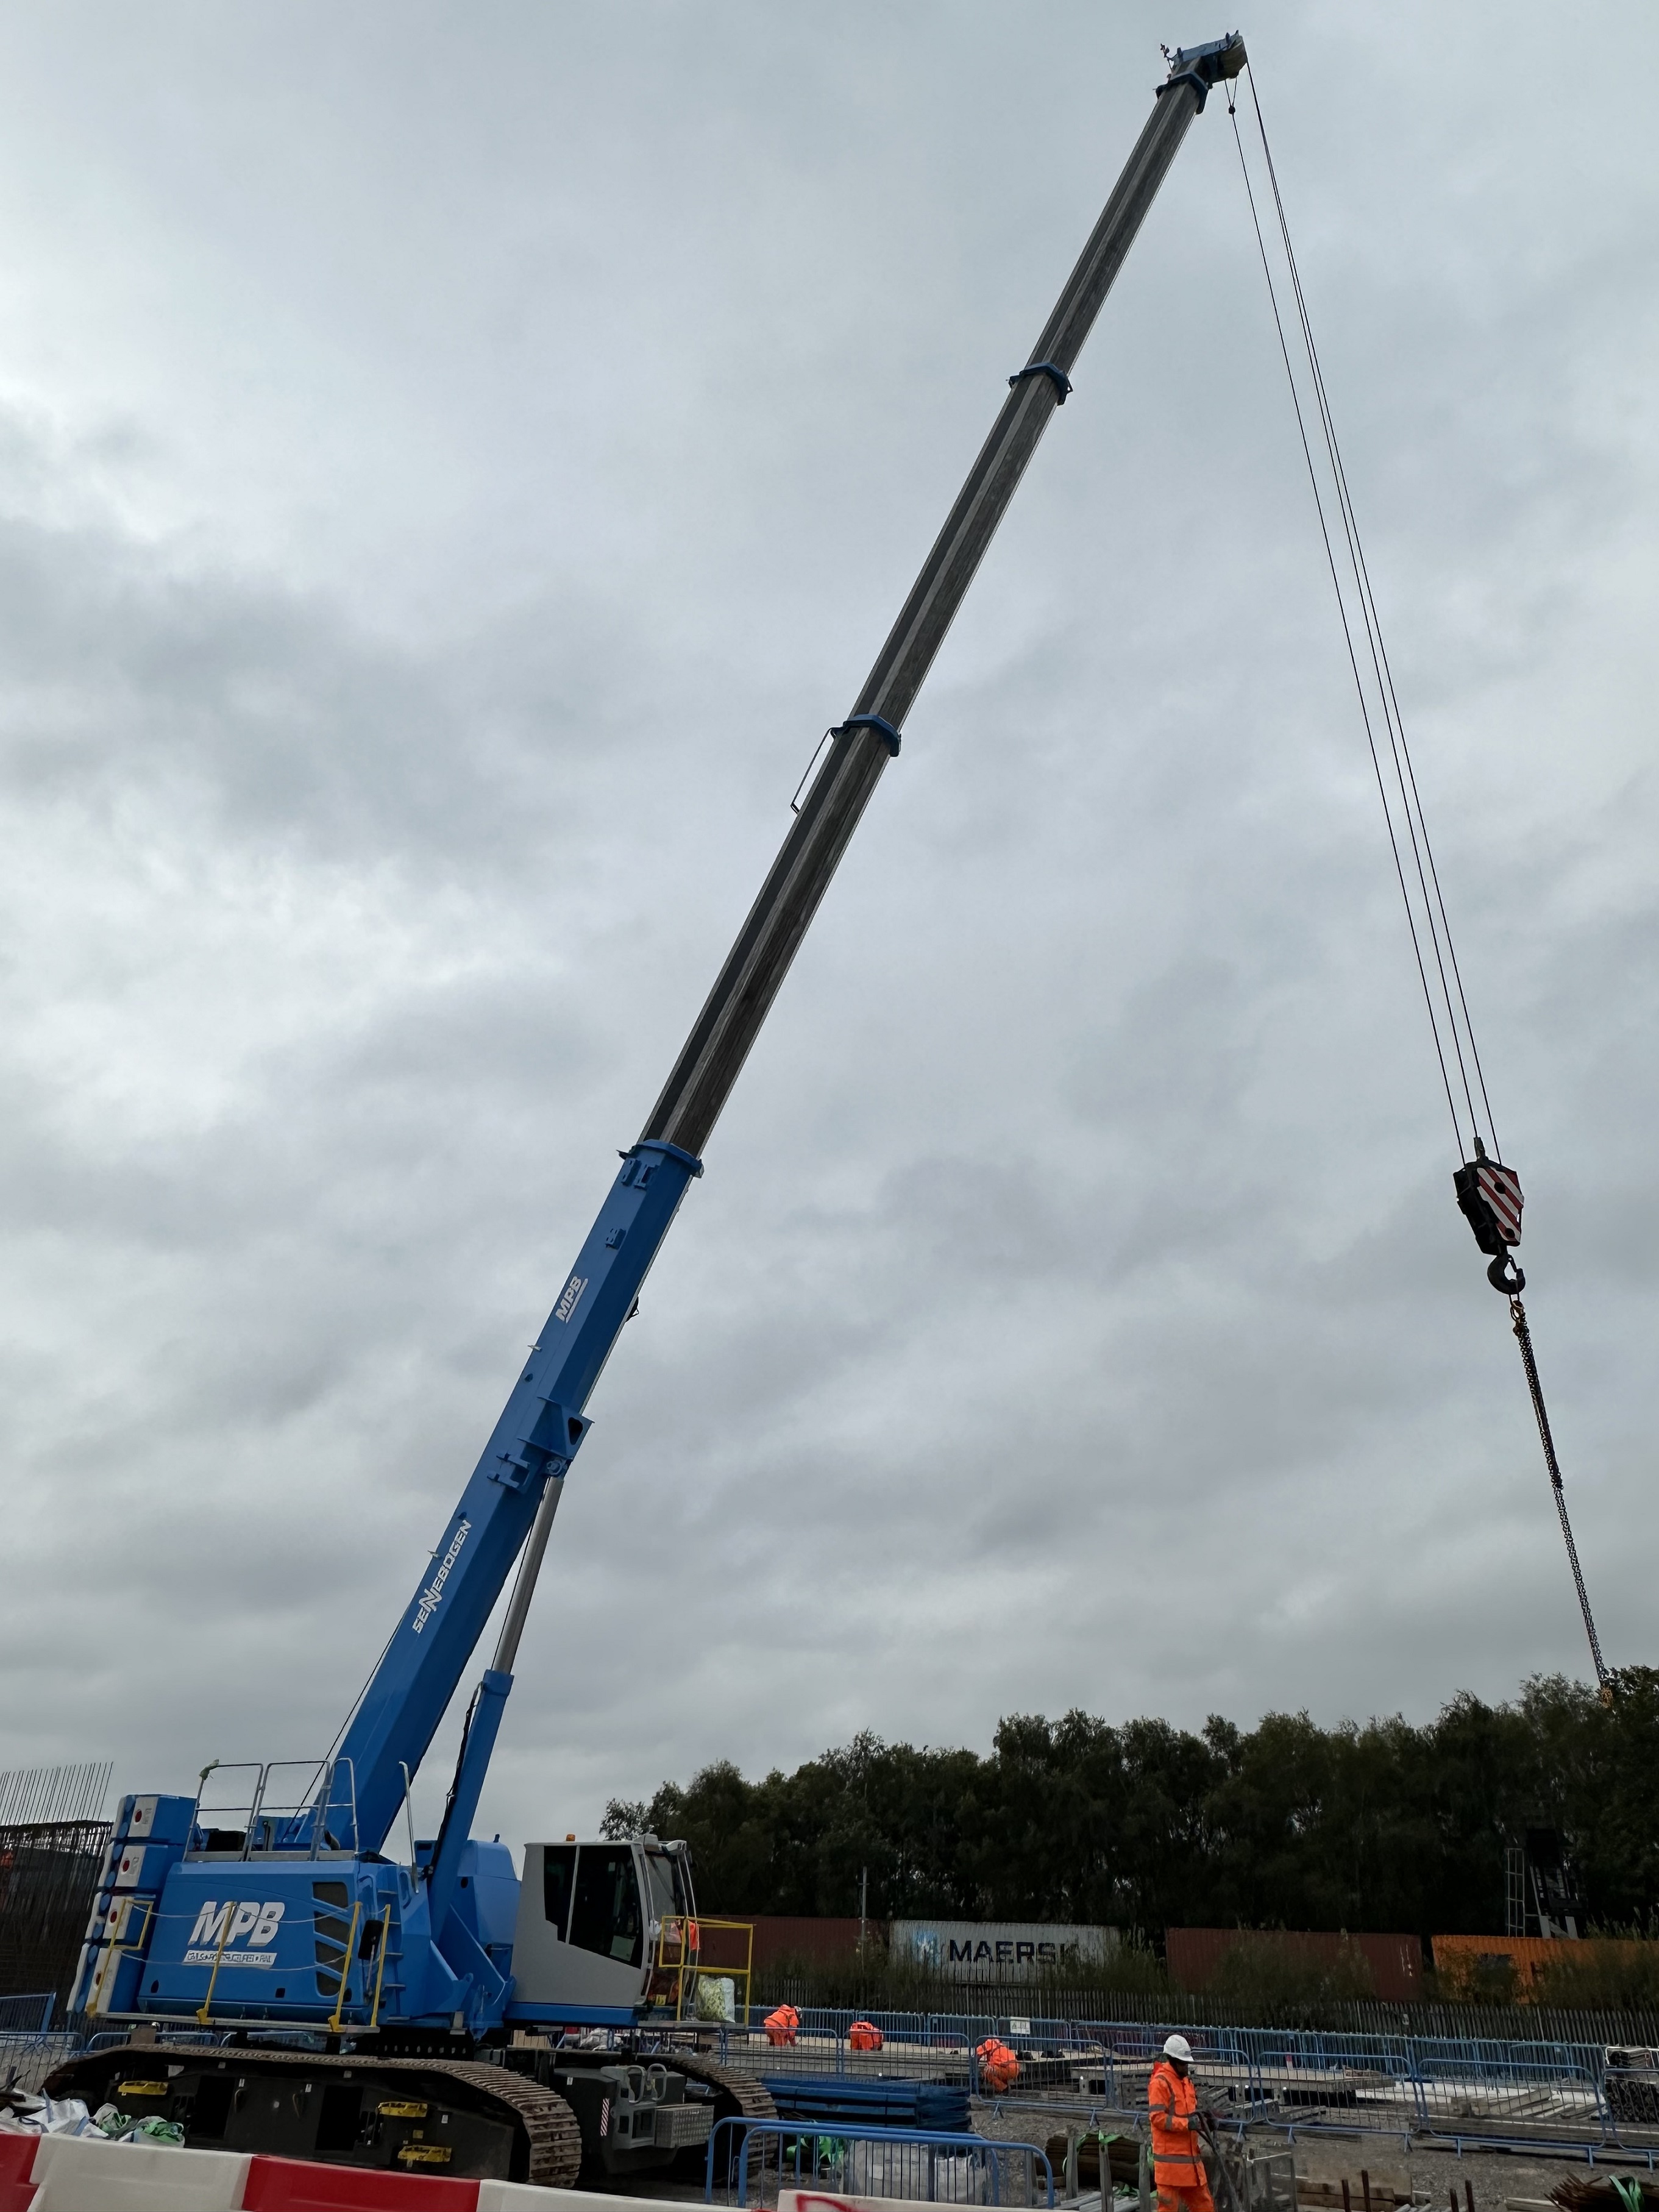 Brace of new model Sennebogen 683E cranes sold to MPB